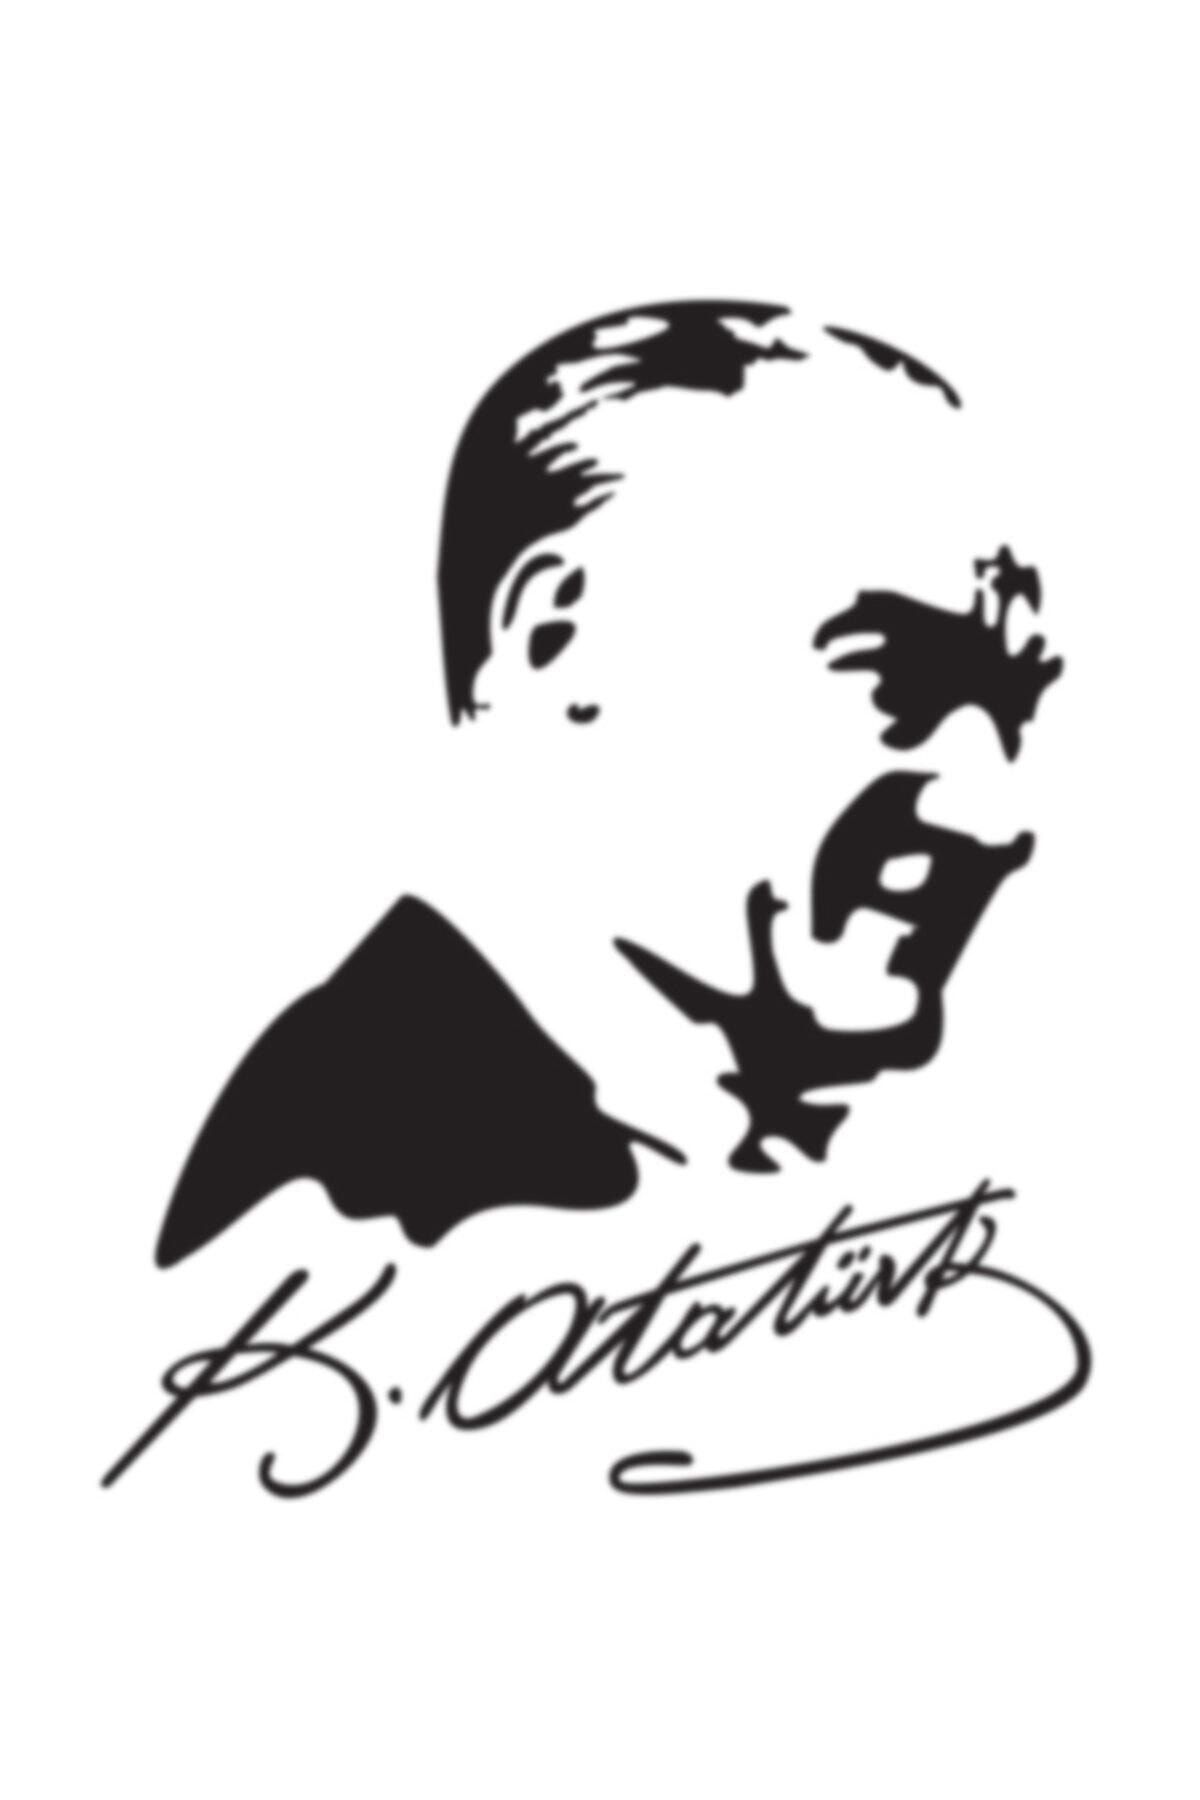 Otografik Imzalı Atatürk Silüeti Oto Sticker 15x19cm Ata13